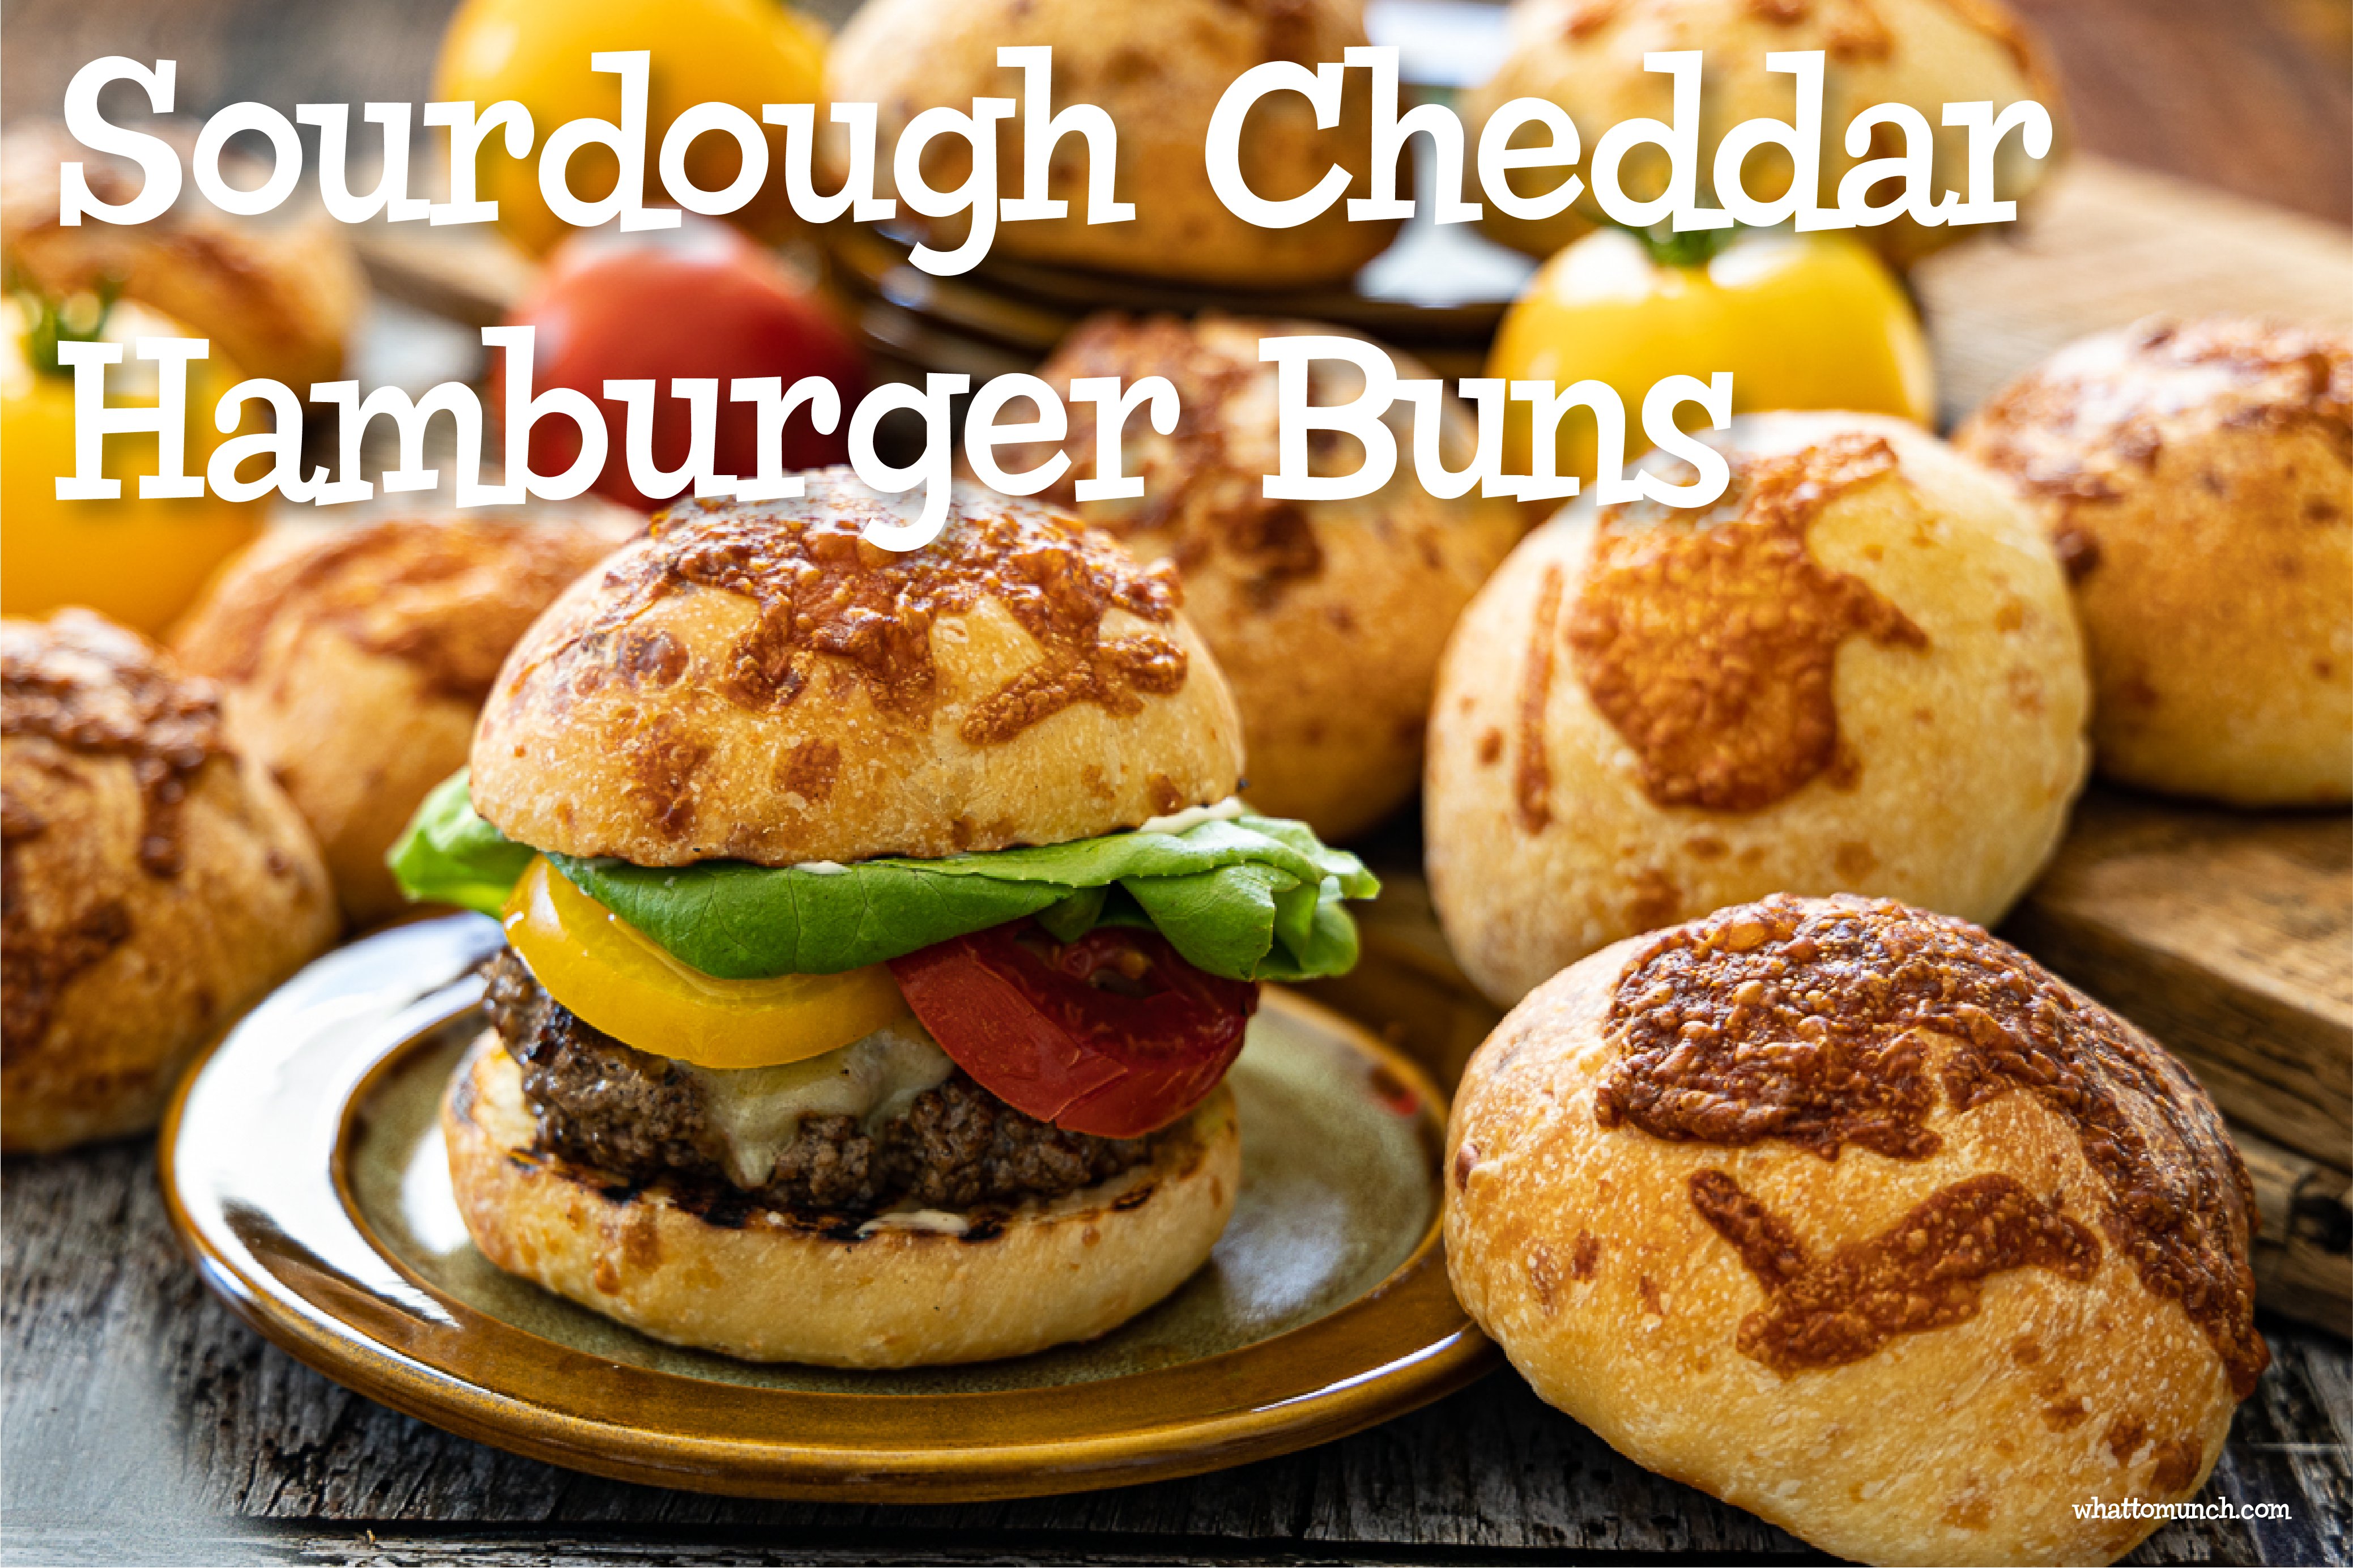 Sourdough Cheddar Hamburger Buns